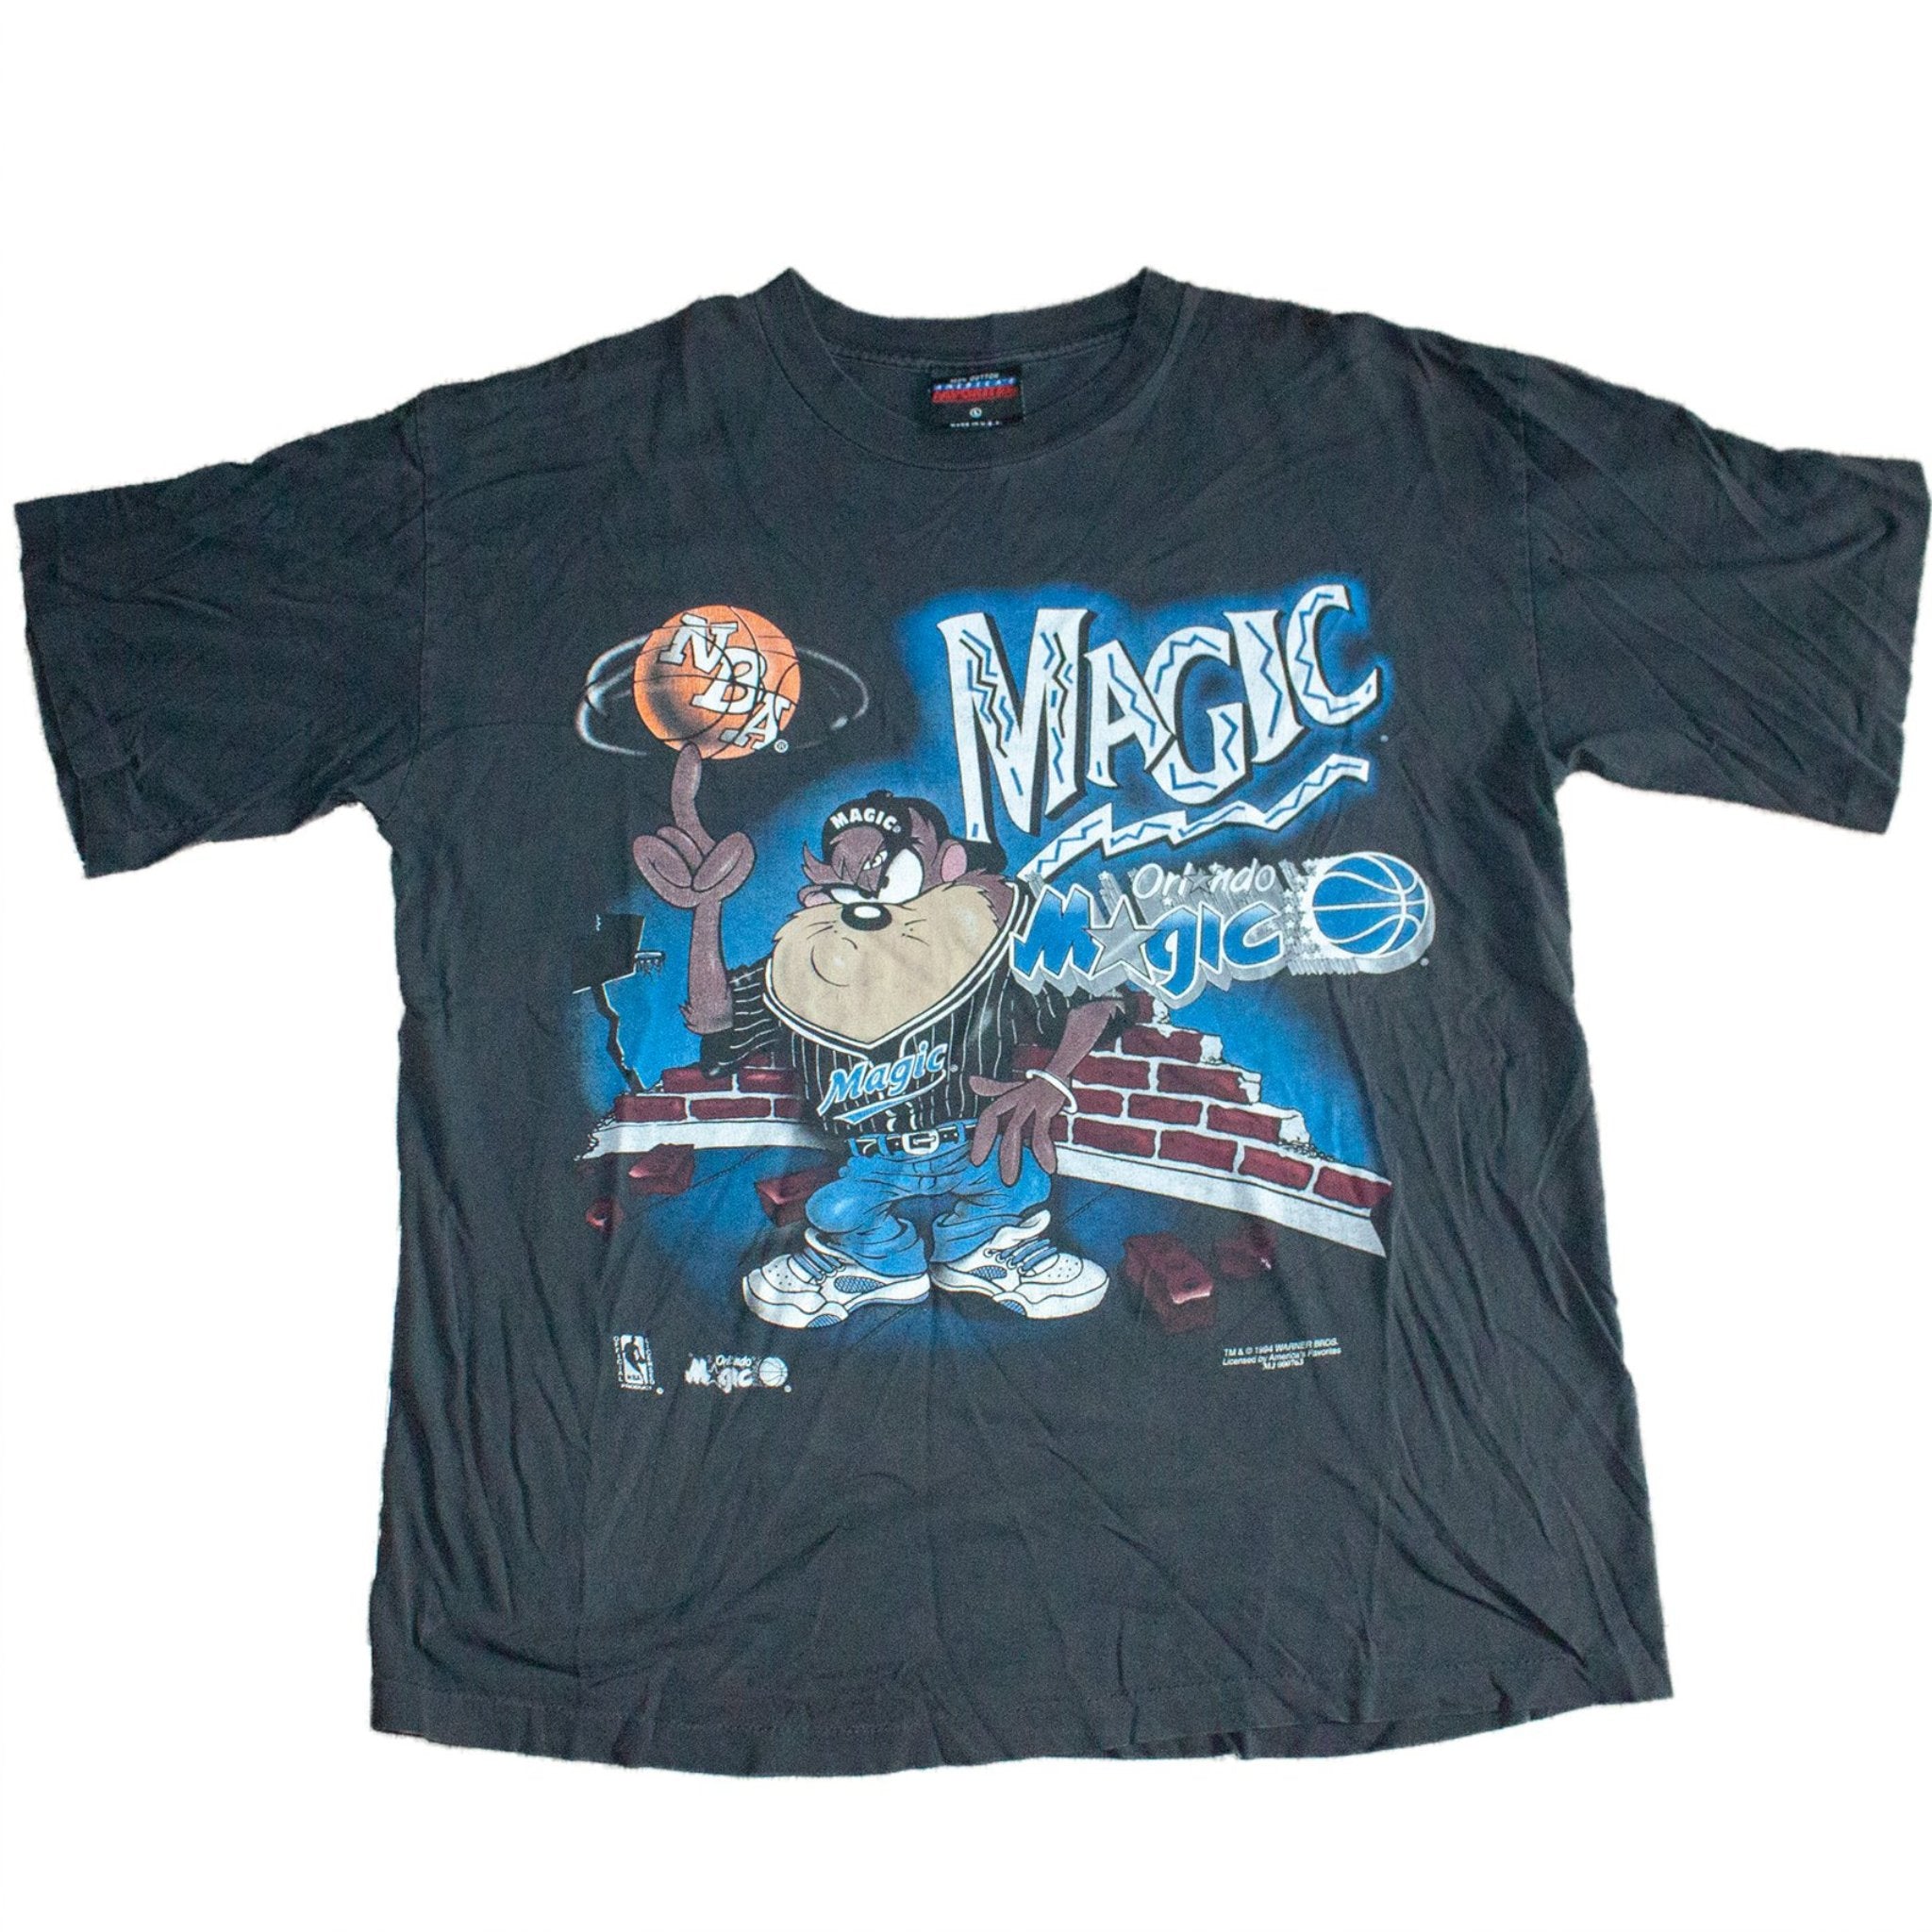 vintage orlando magic shirt